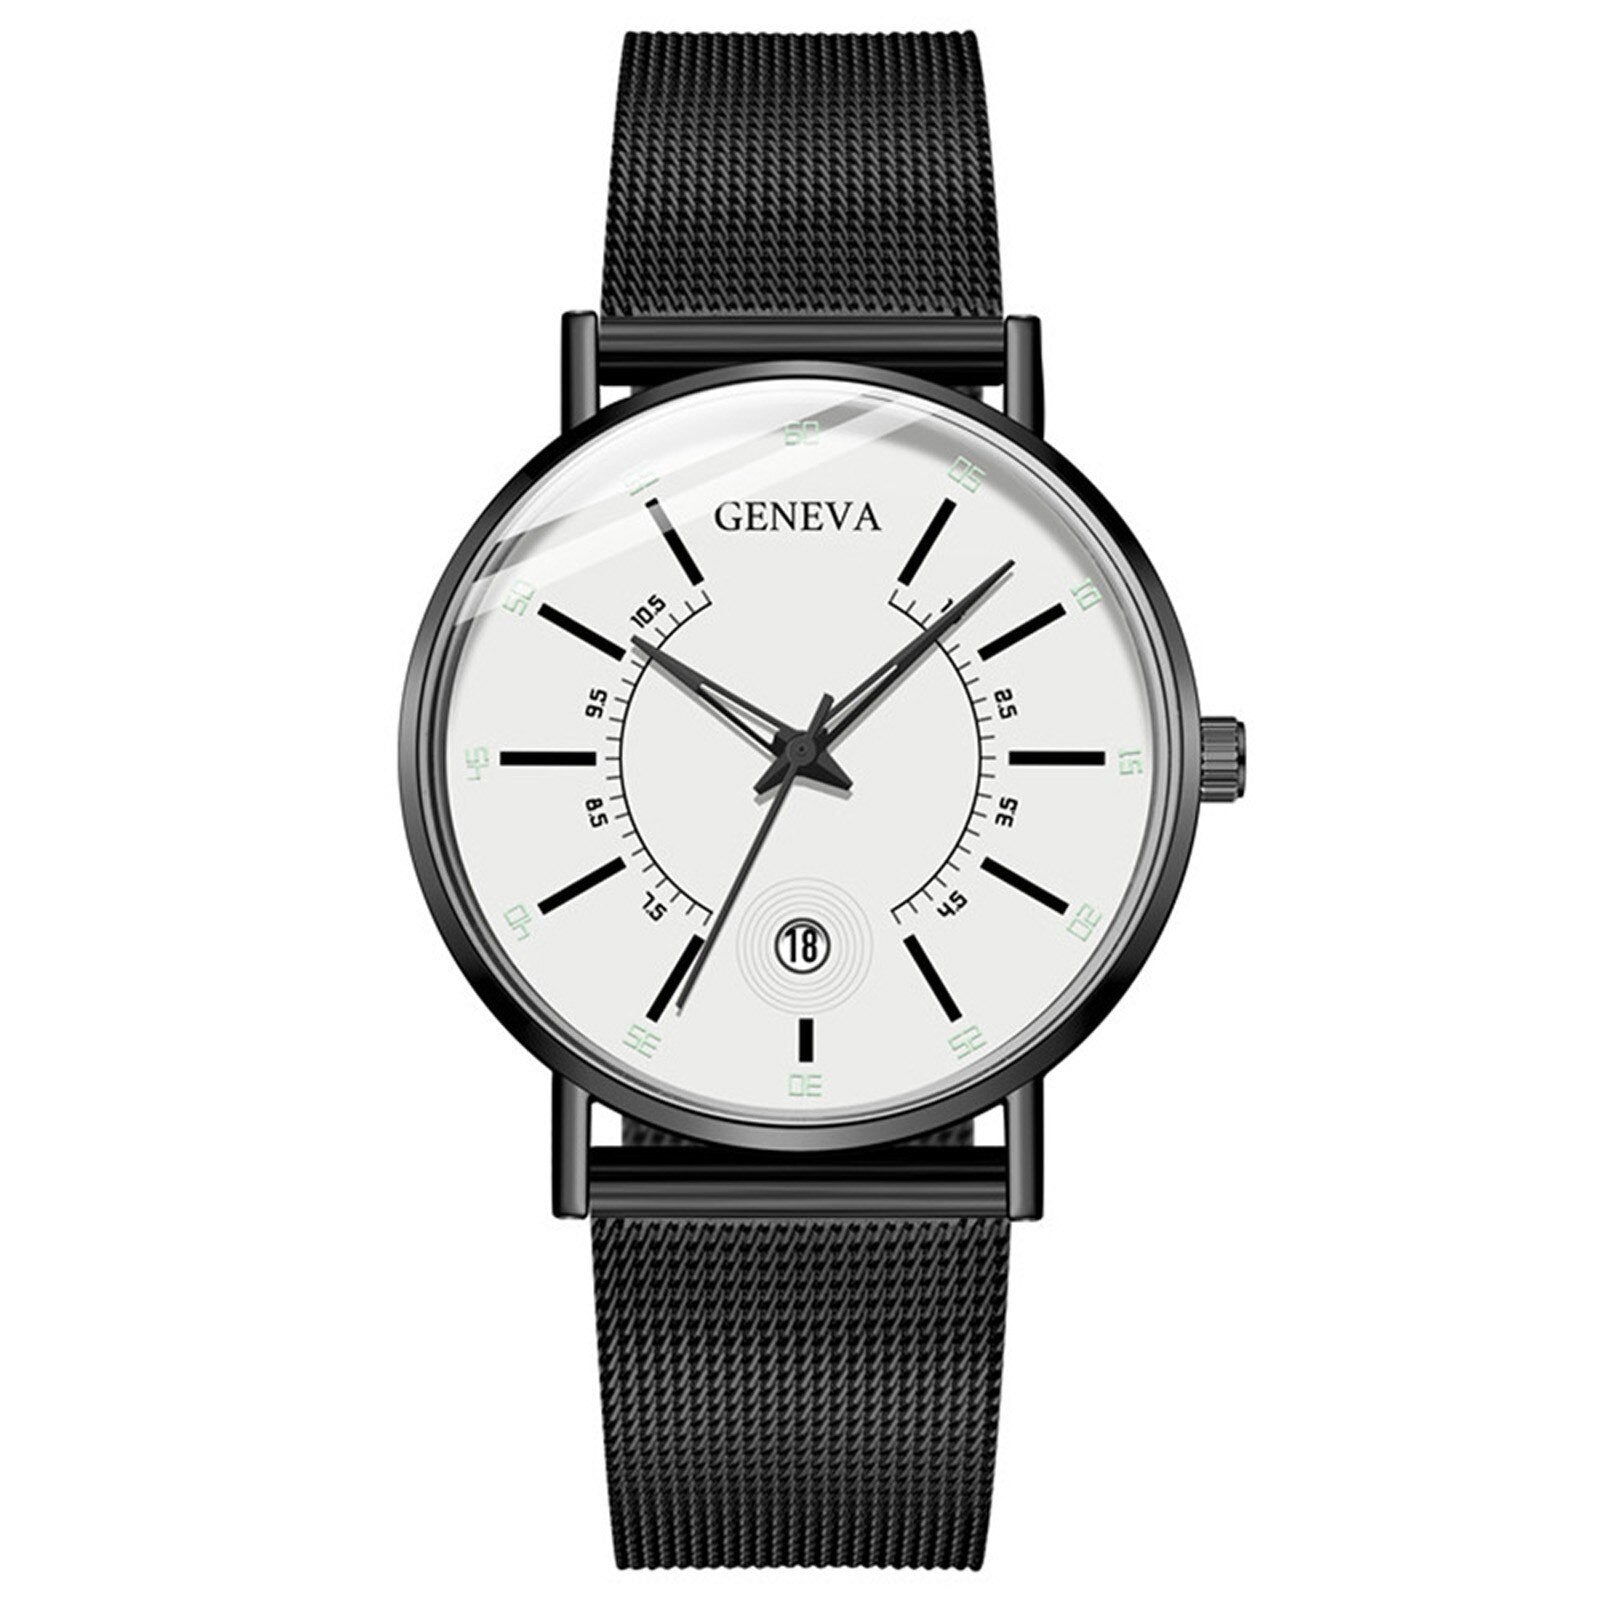 Relógio masculino Geneva minimalista 2020